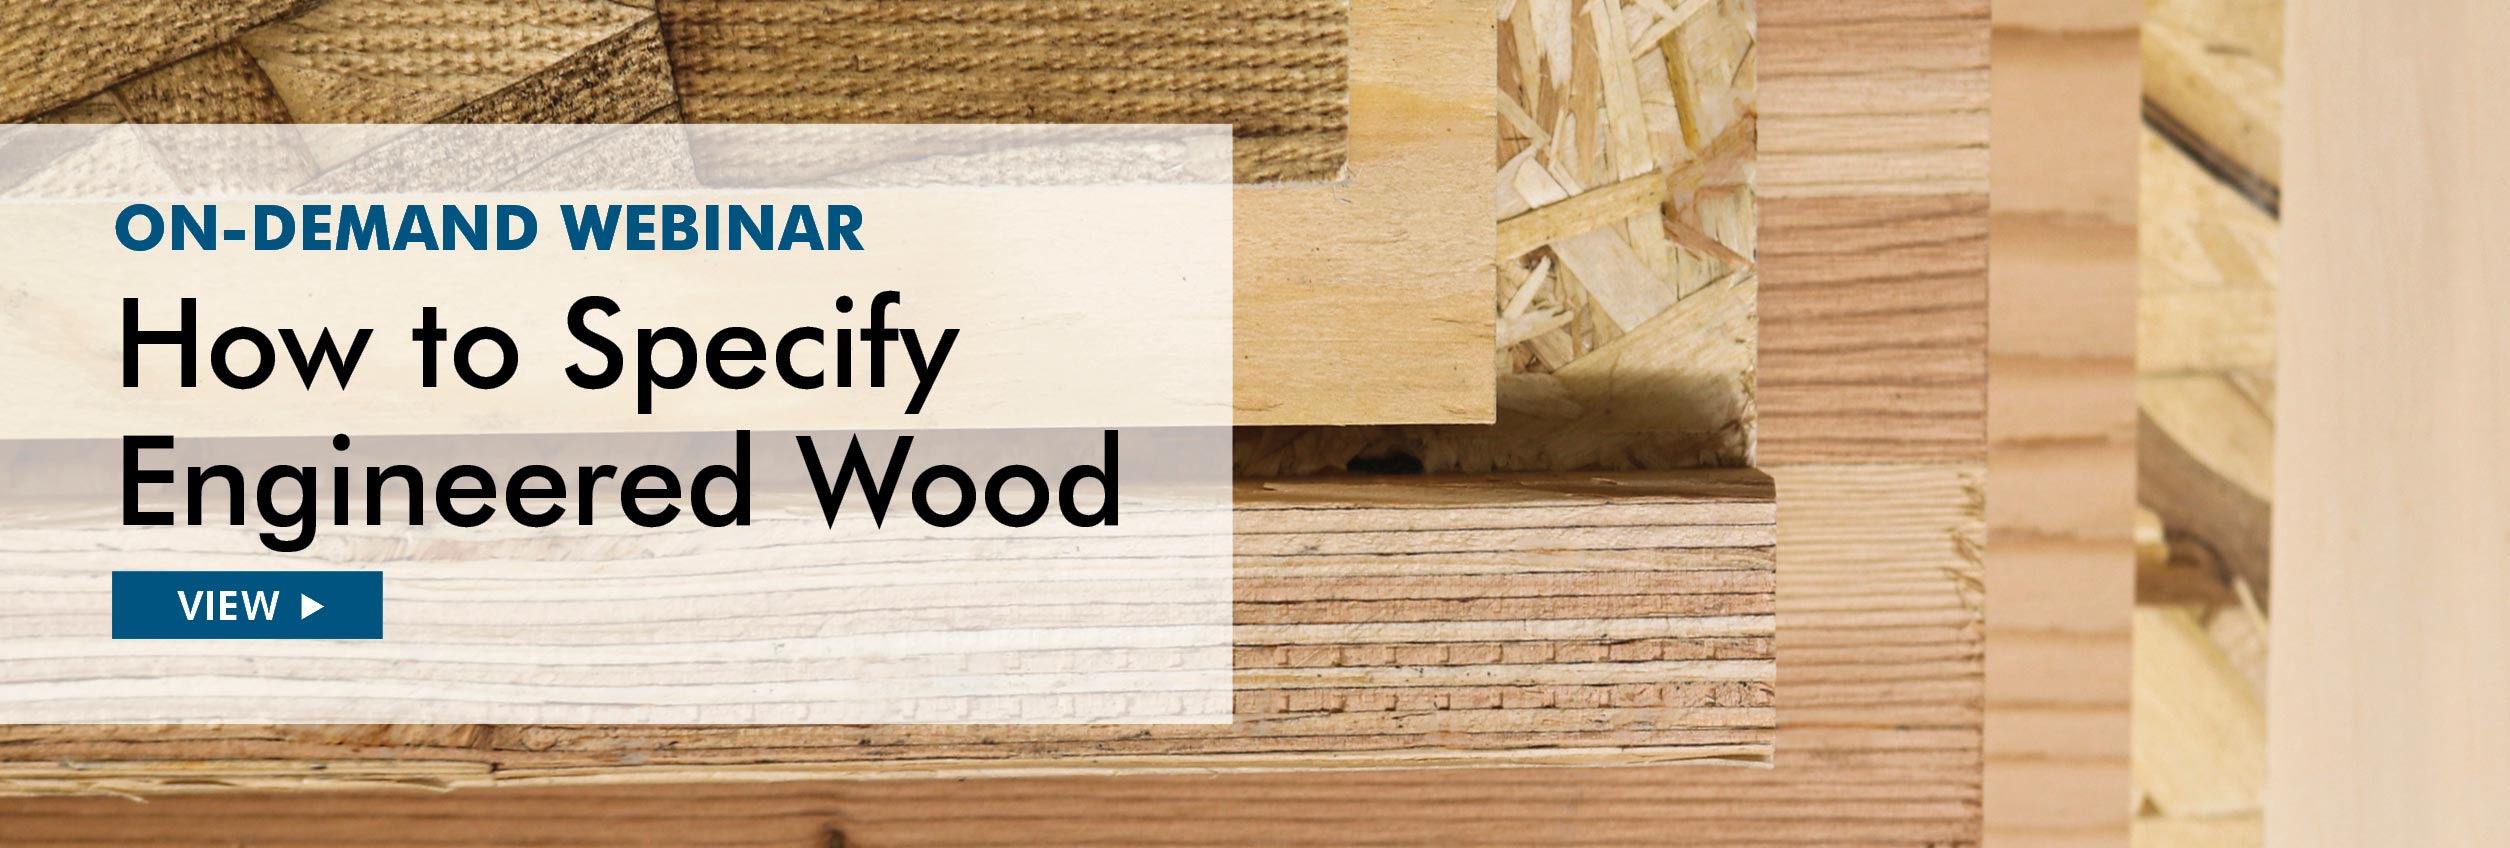 How to Specify Engineered Wood Webinar